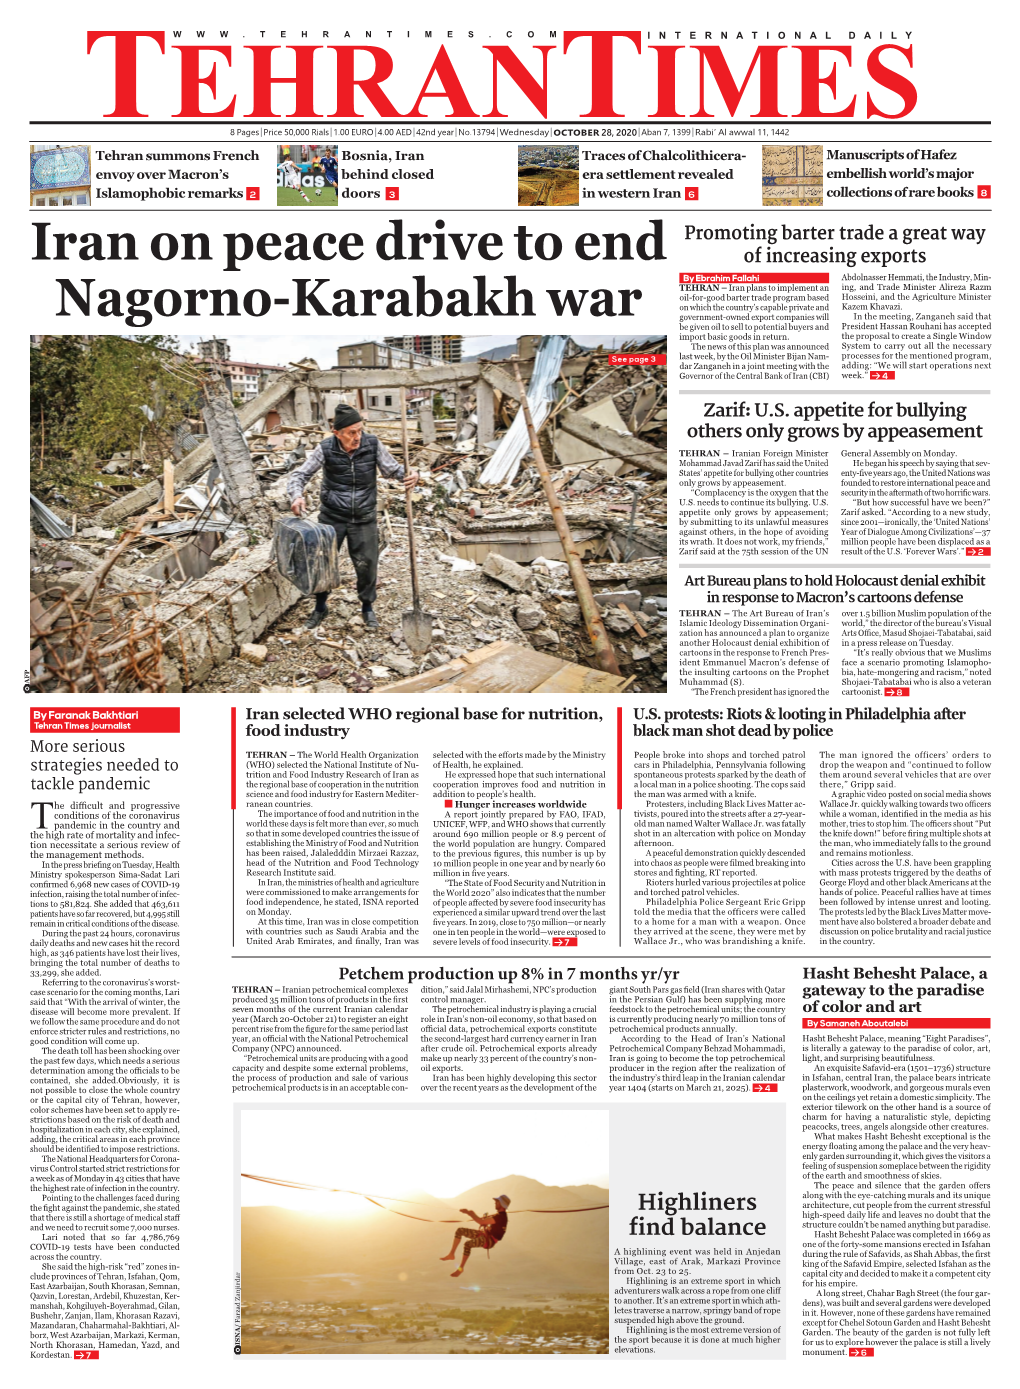 Iran on Peace Drive to End Nagorno-Karabakh